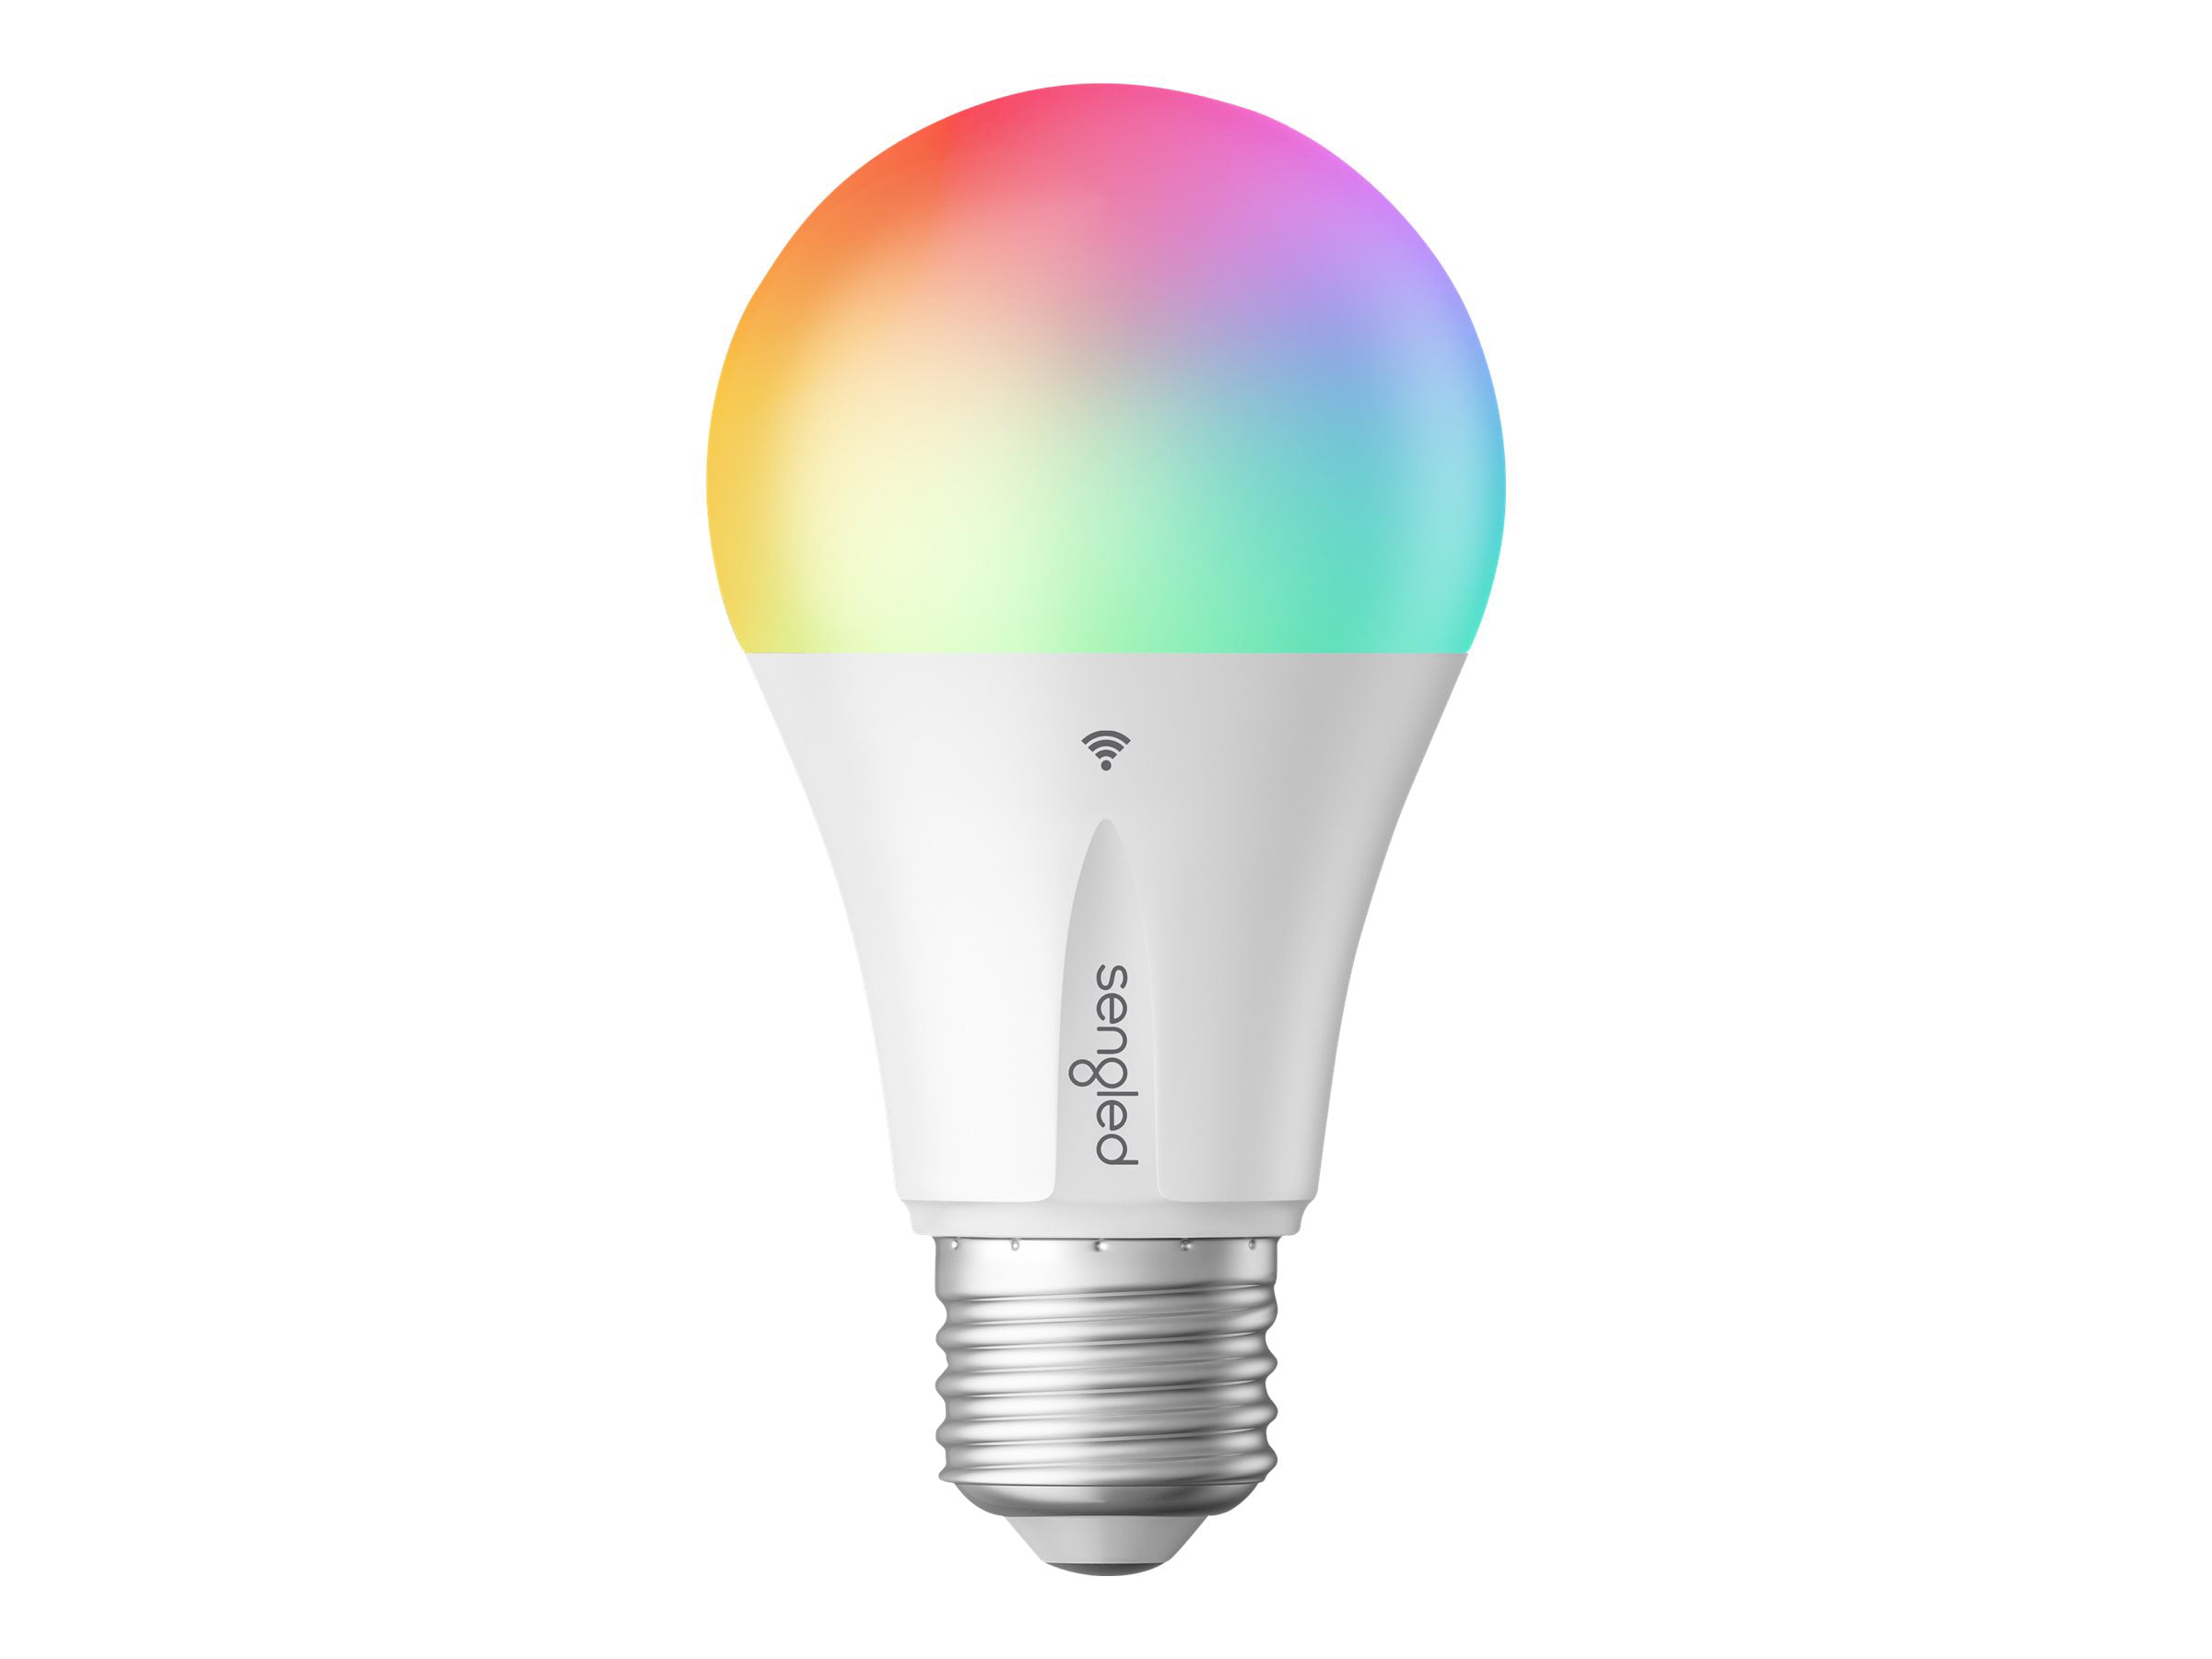 Indgang kød Formen Sengled Smart - LED light bulb - shape: A19 - E26 - 9 W (equivalent 60 W) -  16 million colors - 2000-6500 K - white - Walmart.com